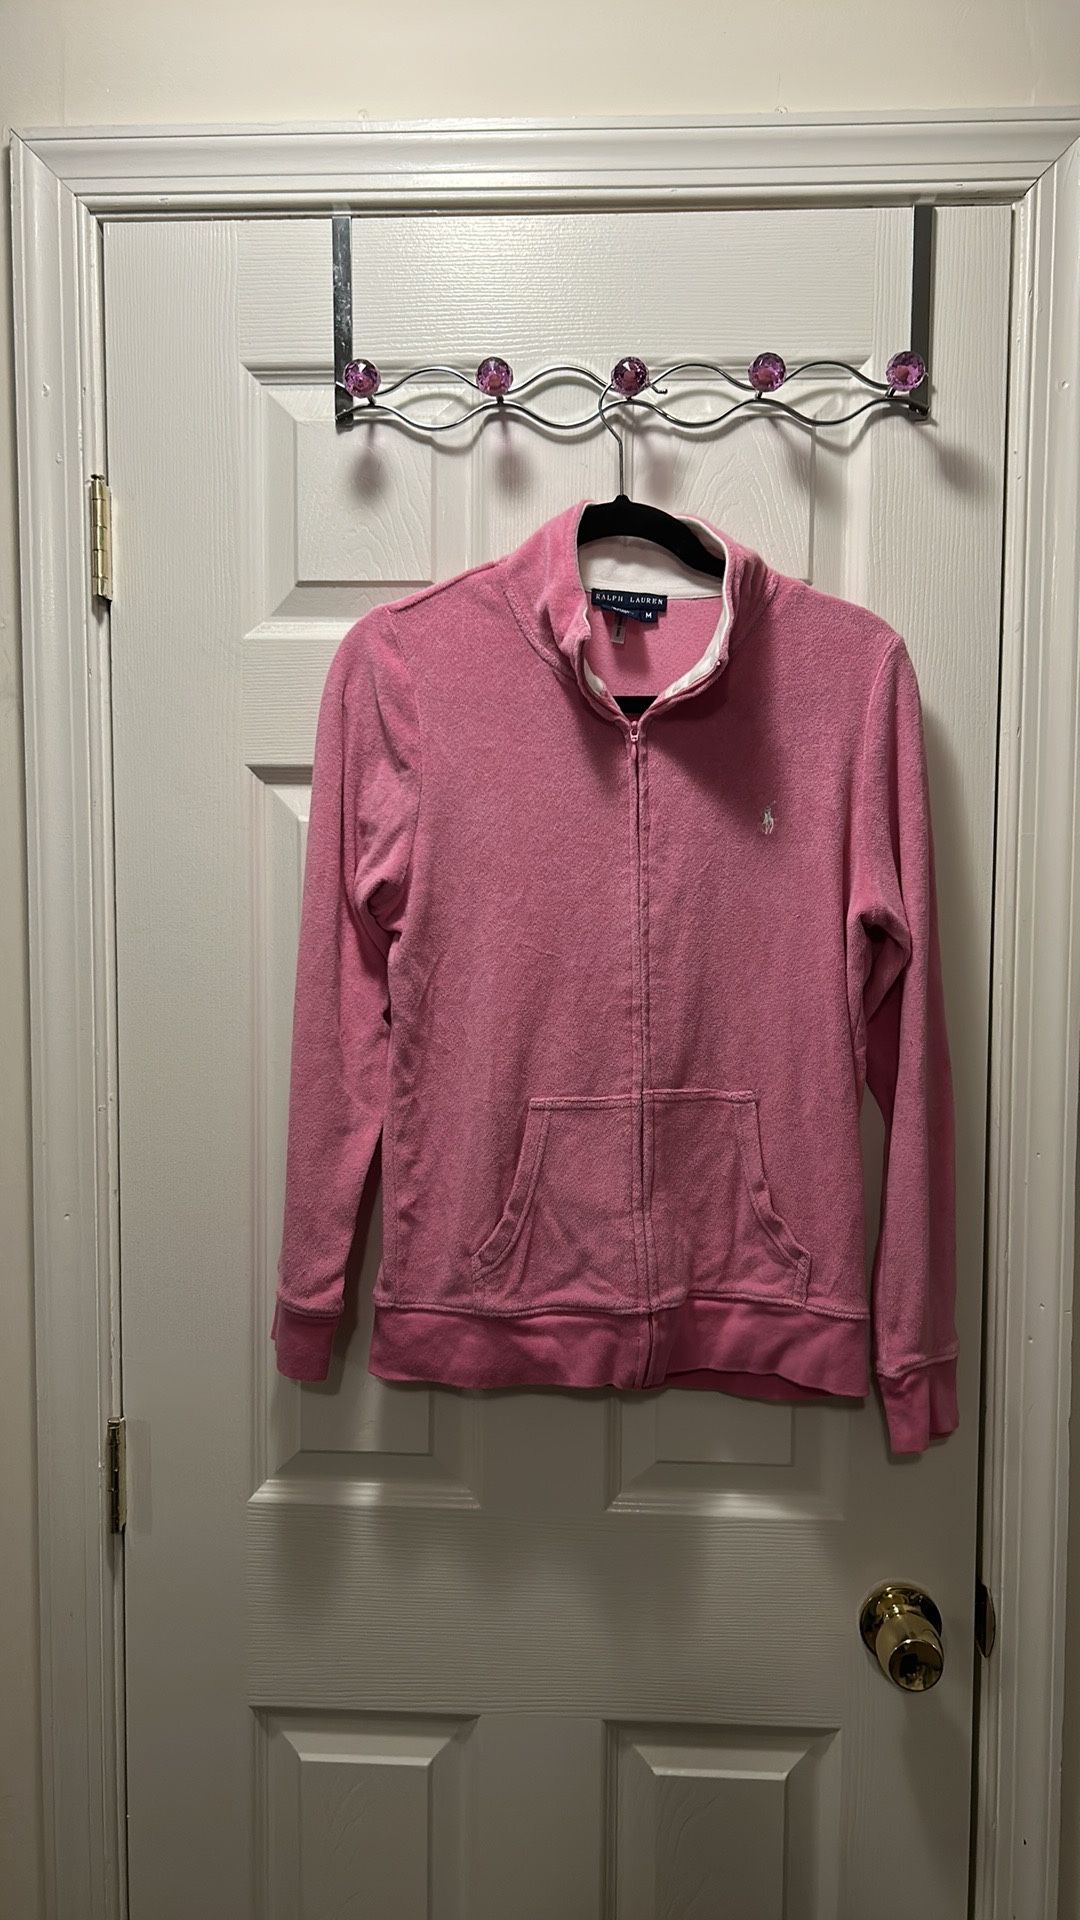 Pink Zipup Jacket